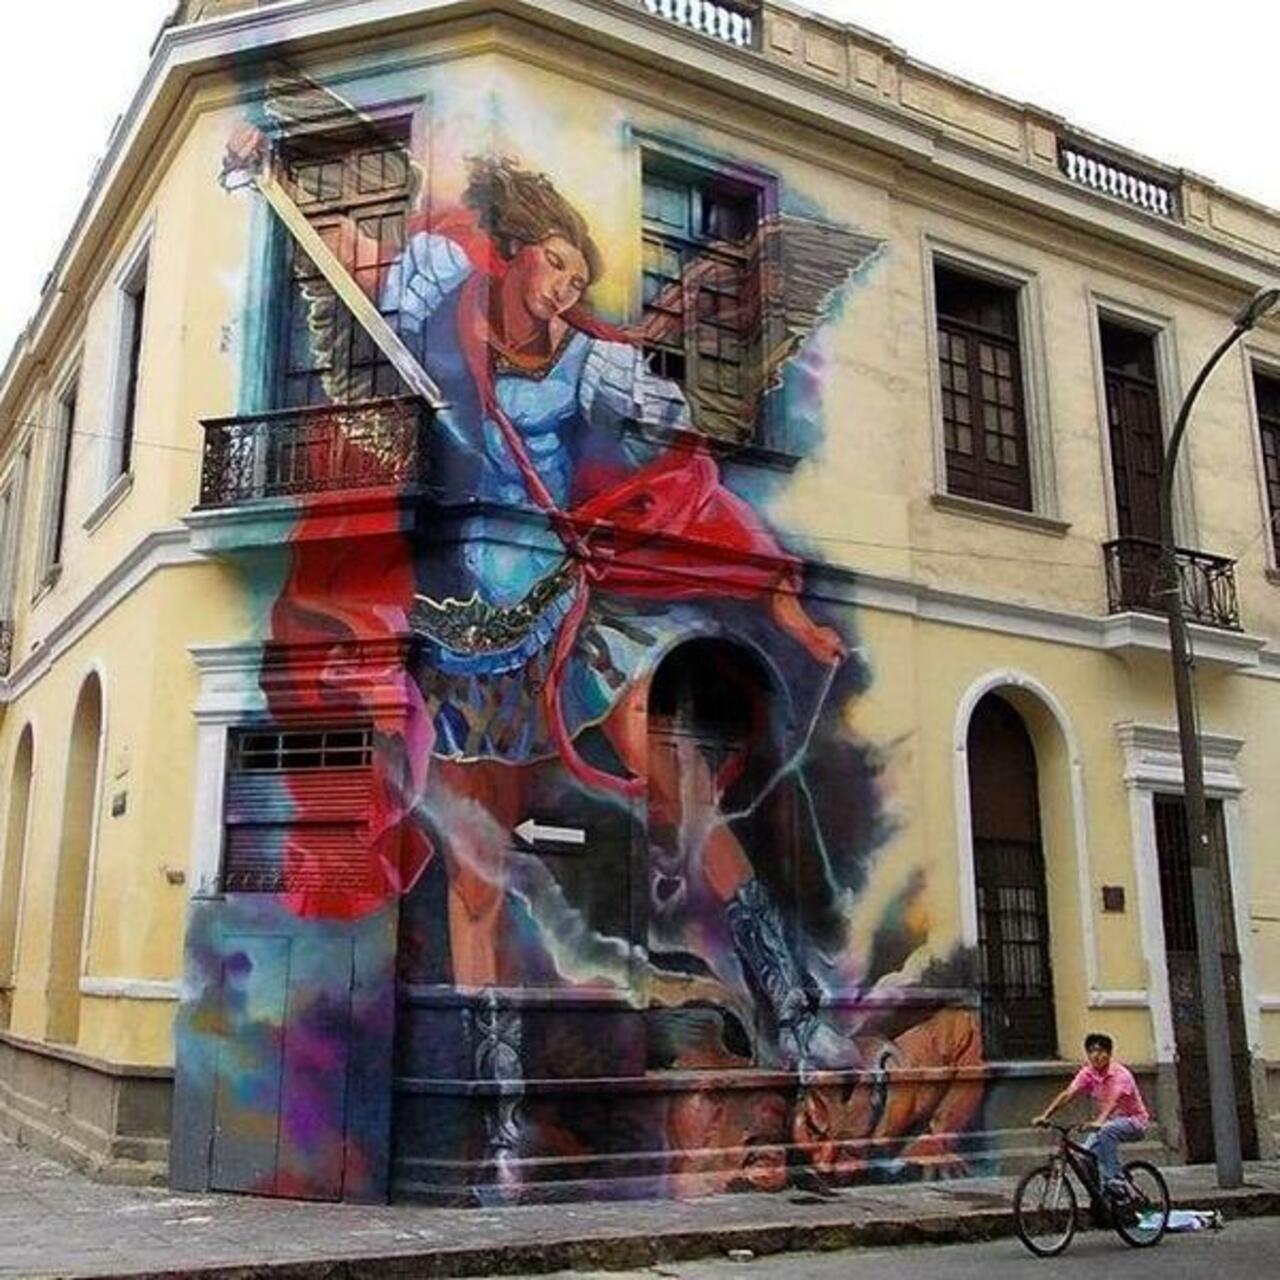 RT @Peepsqueak @FCuypers Street art #graffiti by Raf in Lima, Peru @KimKaosDK #streetart #urbanart #peru #art #mural http://t.co/pSa6DnWajB